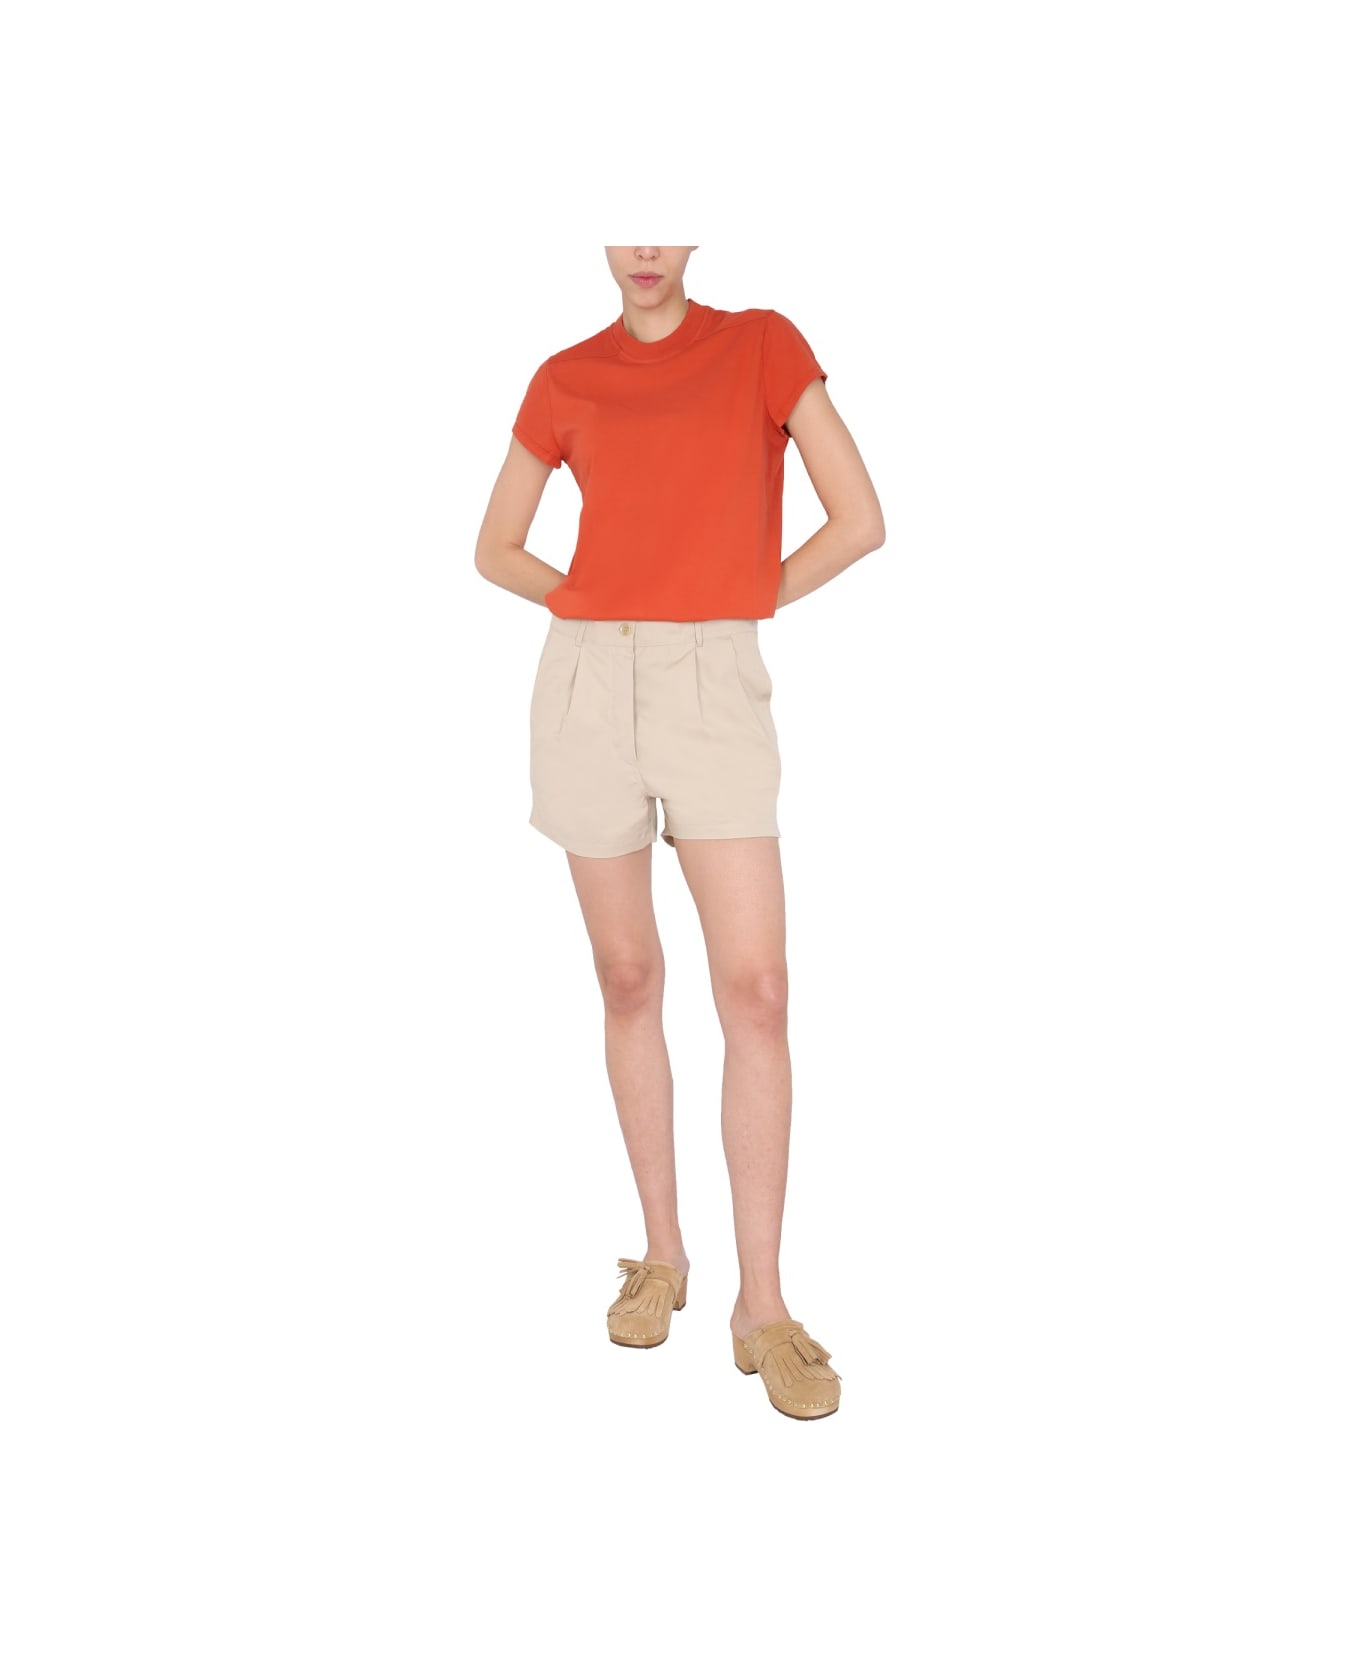 Aspesi Cotton Shorts - BEIGE